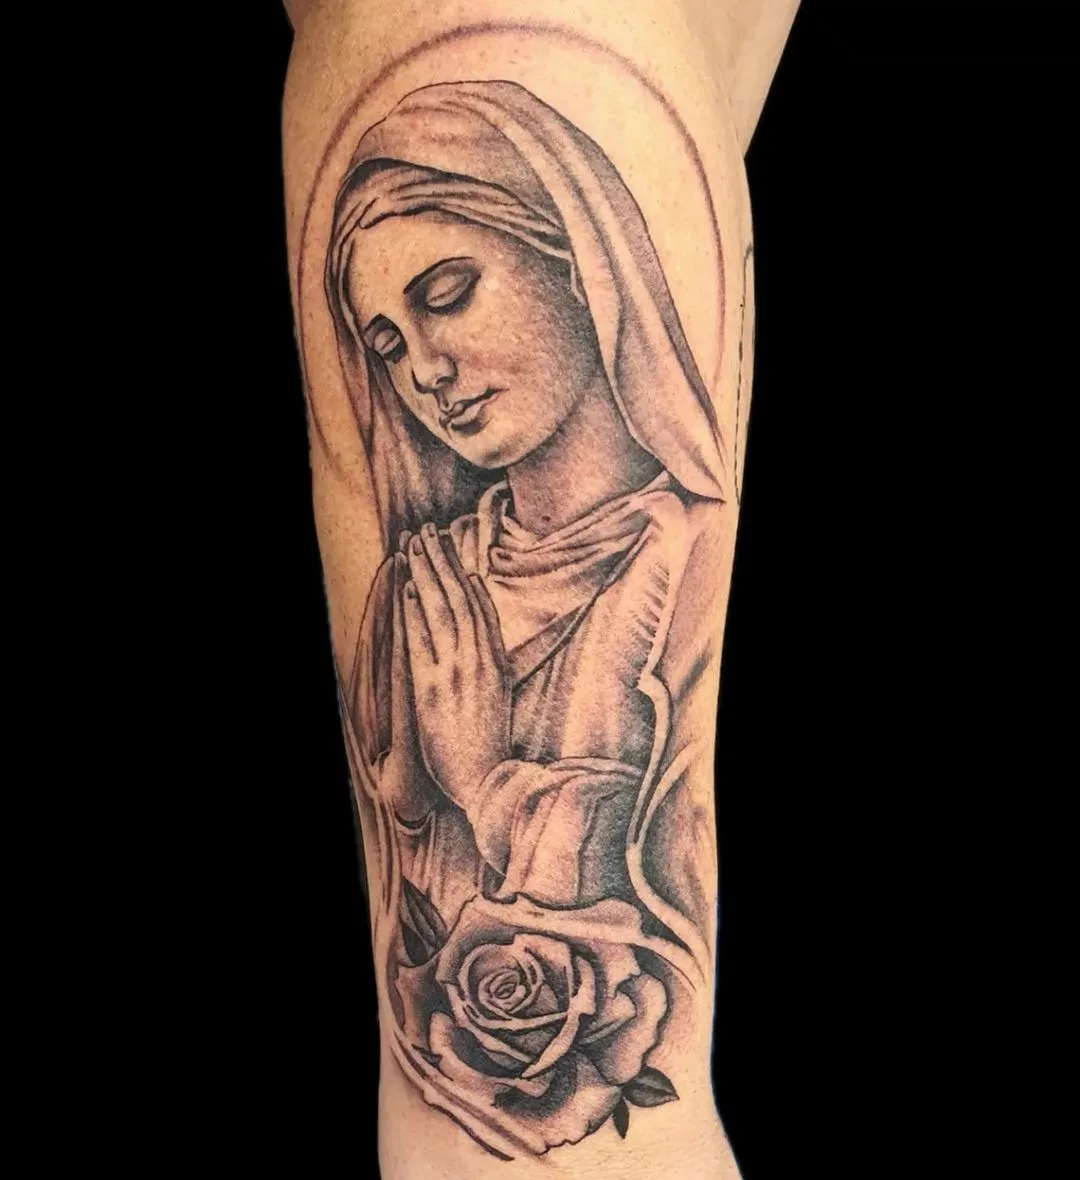 Classic black and grey Virgin Mary tattoo